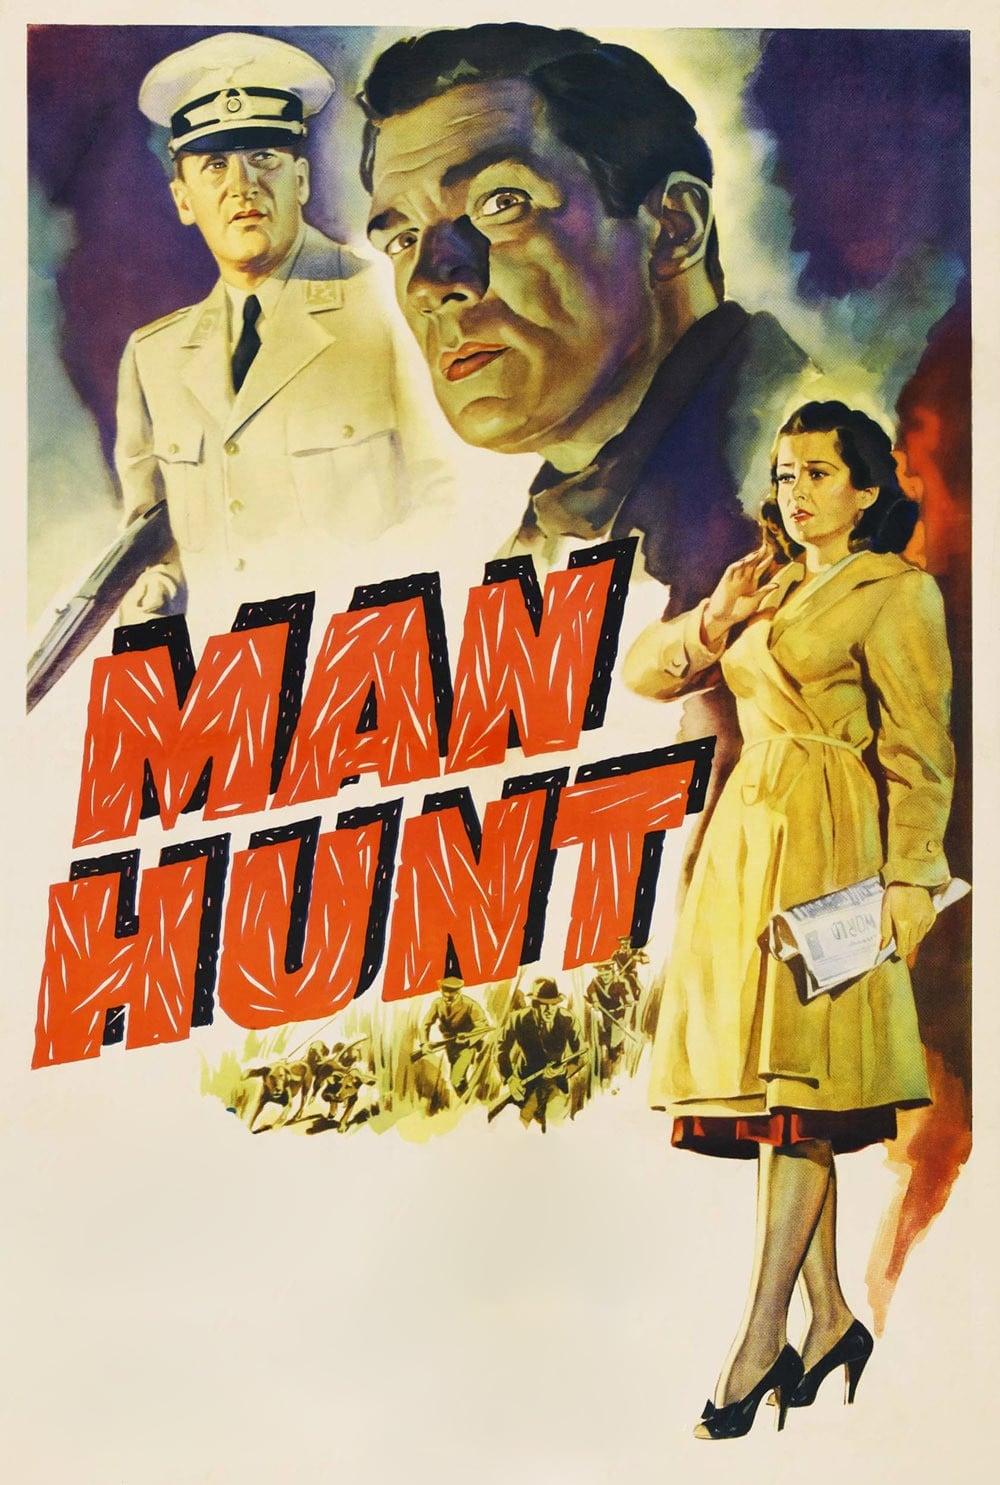 Man Hunt poster